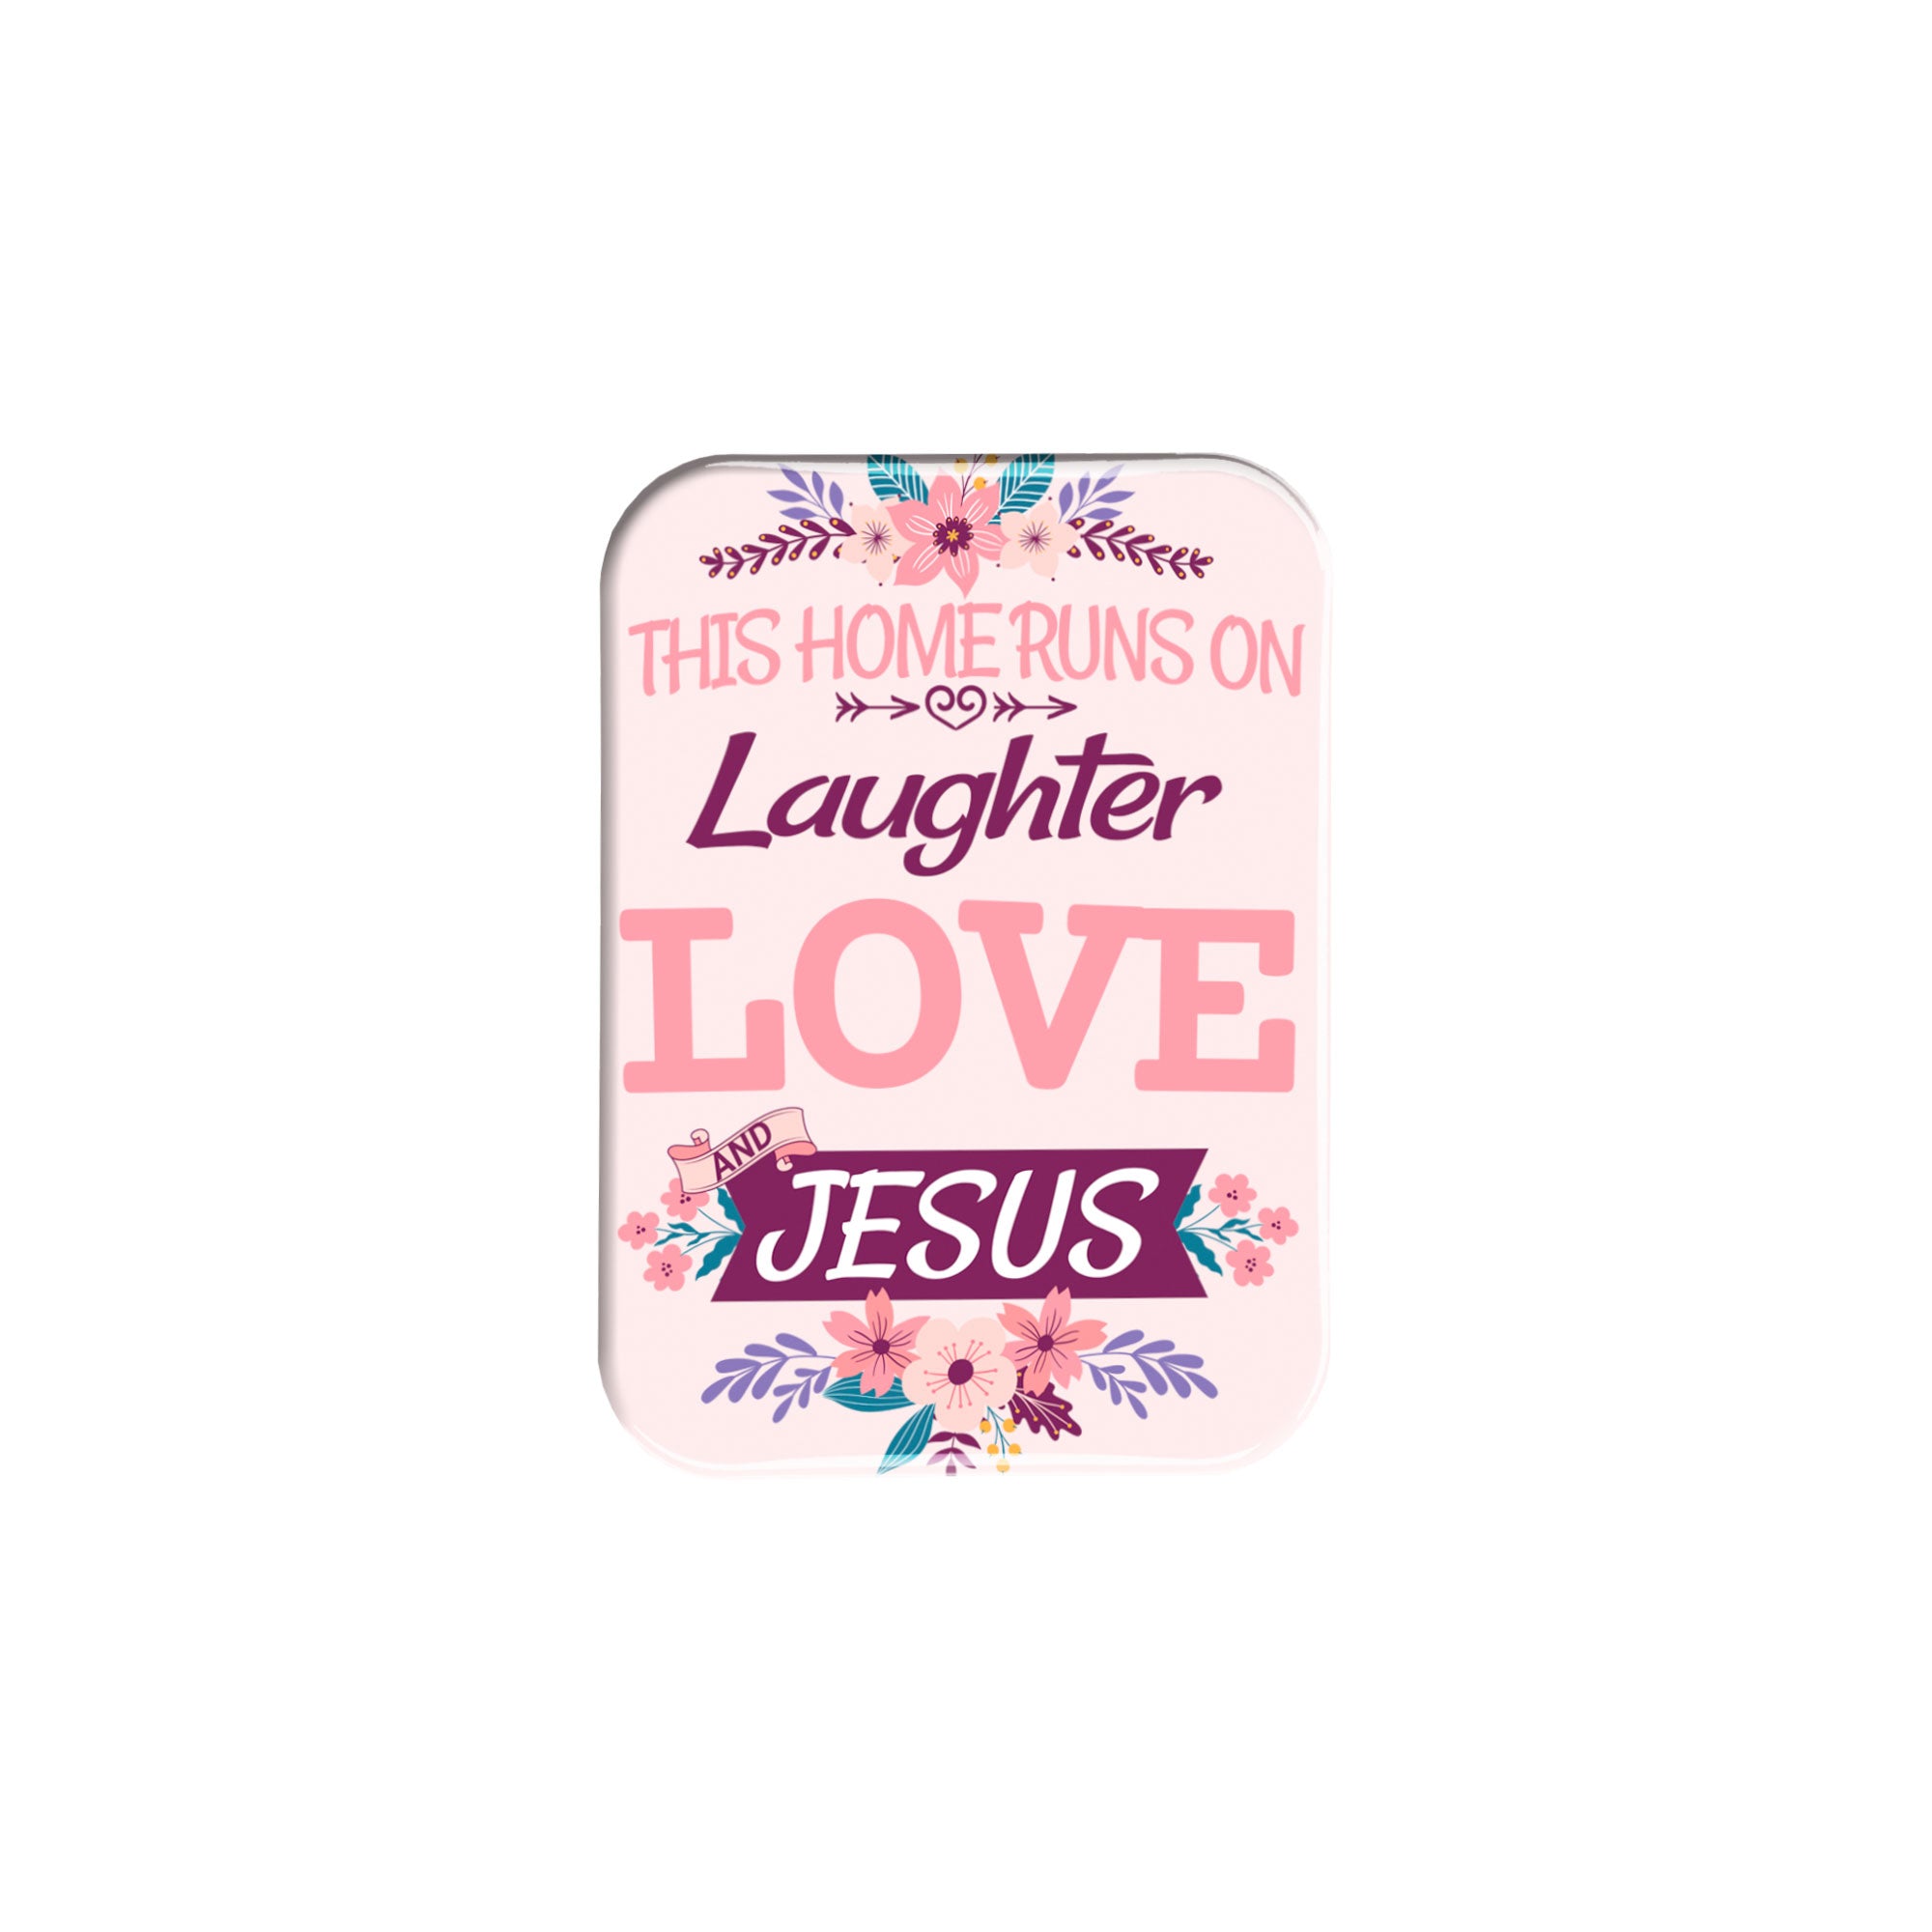 "Laughter Love Jesus" - 2.5" X 3.5" Rectangle Fridge Magnets